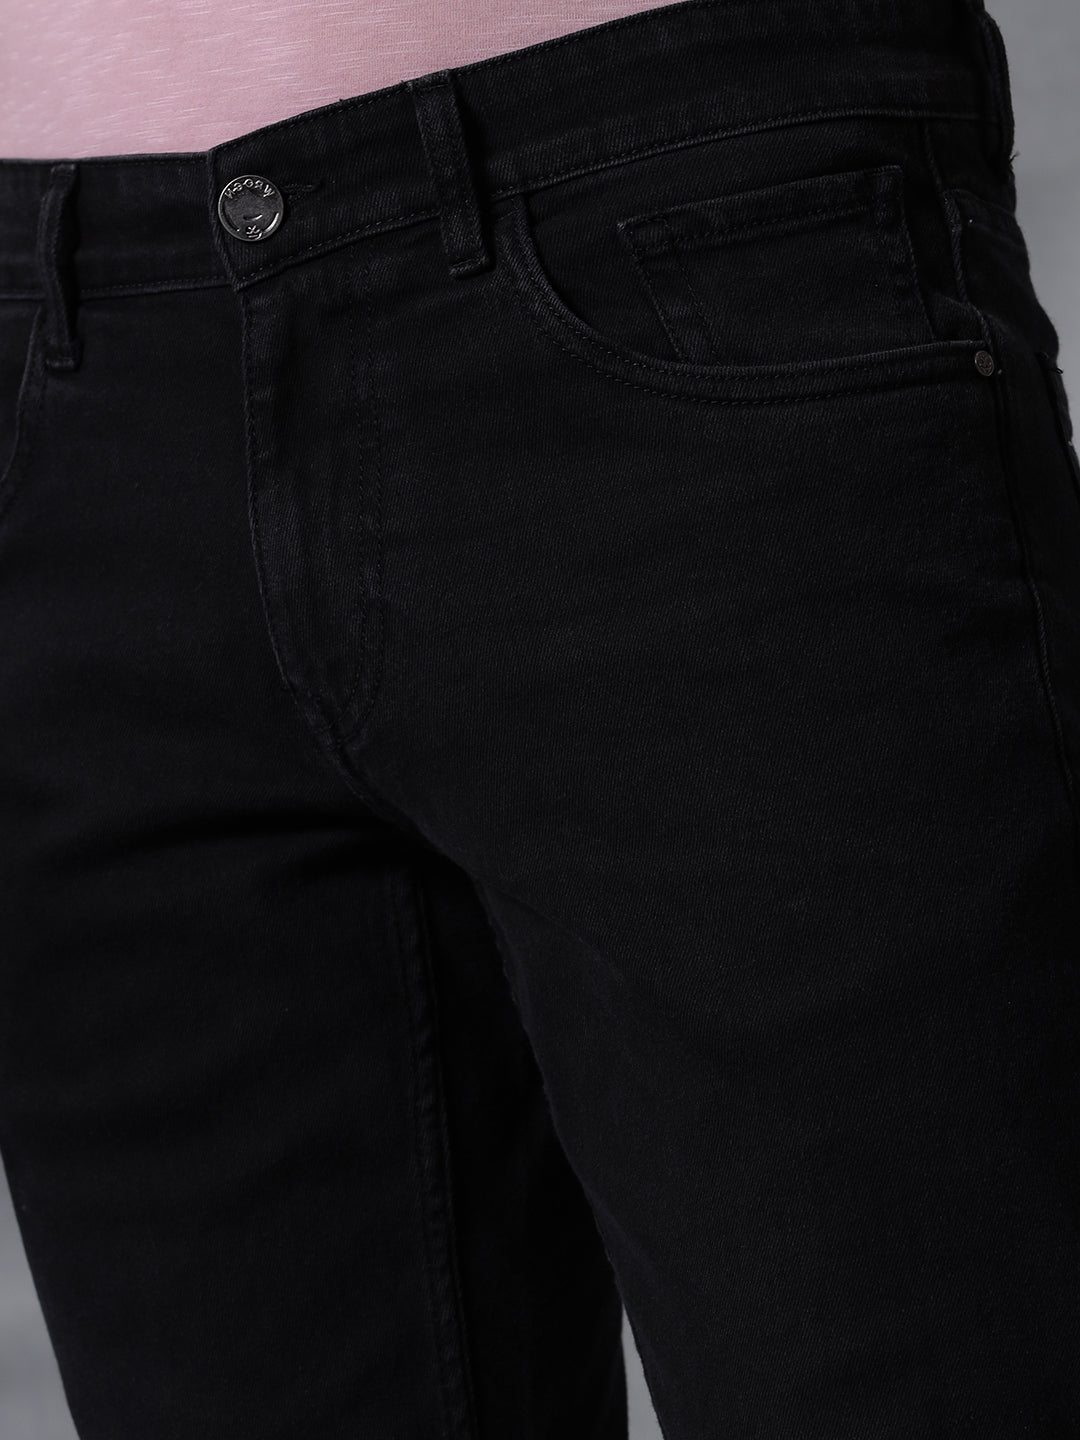 Dark Charcoal Slim Fit Jeans